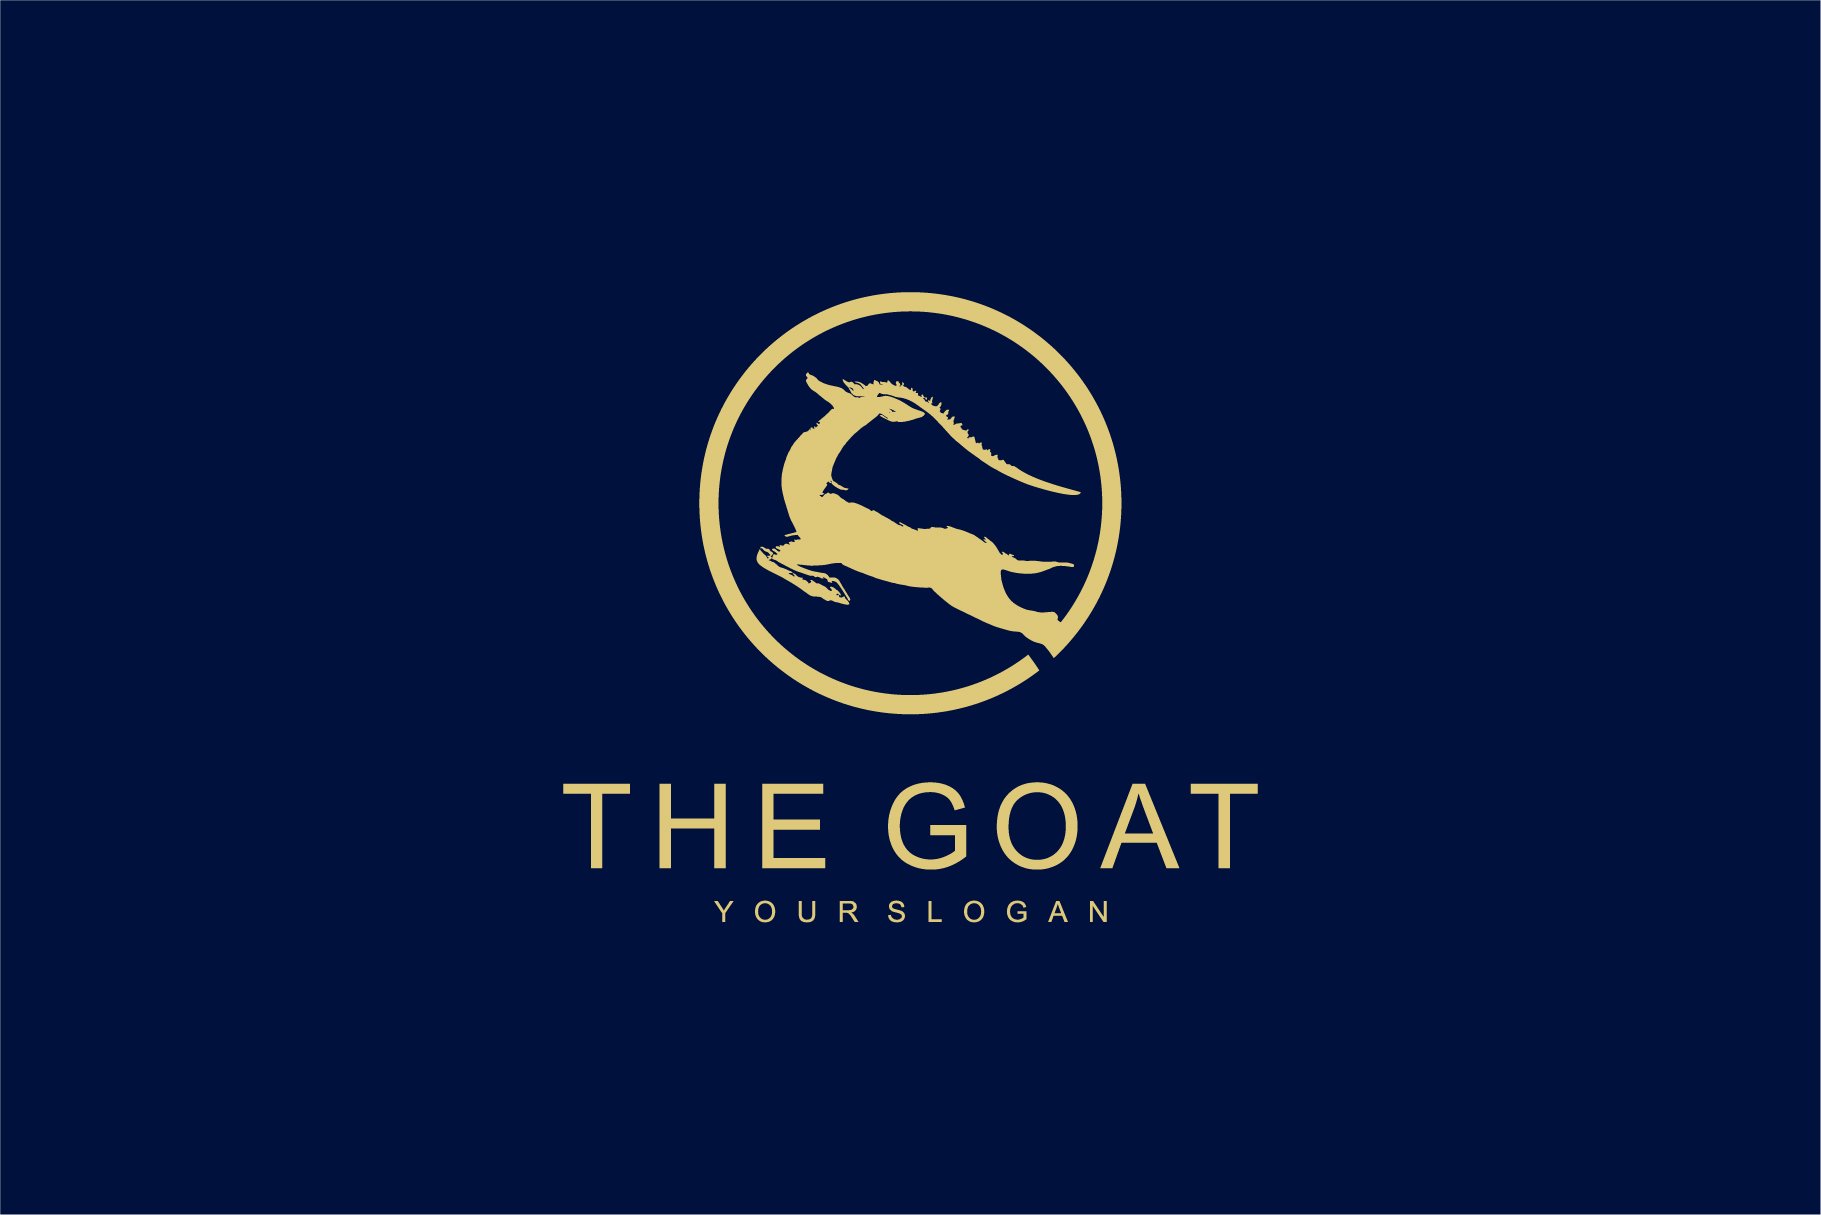 Elegant The Goat Logo Design Vector cover image.